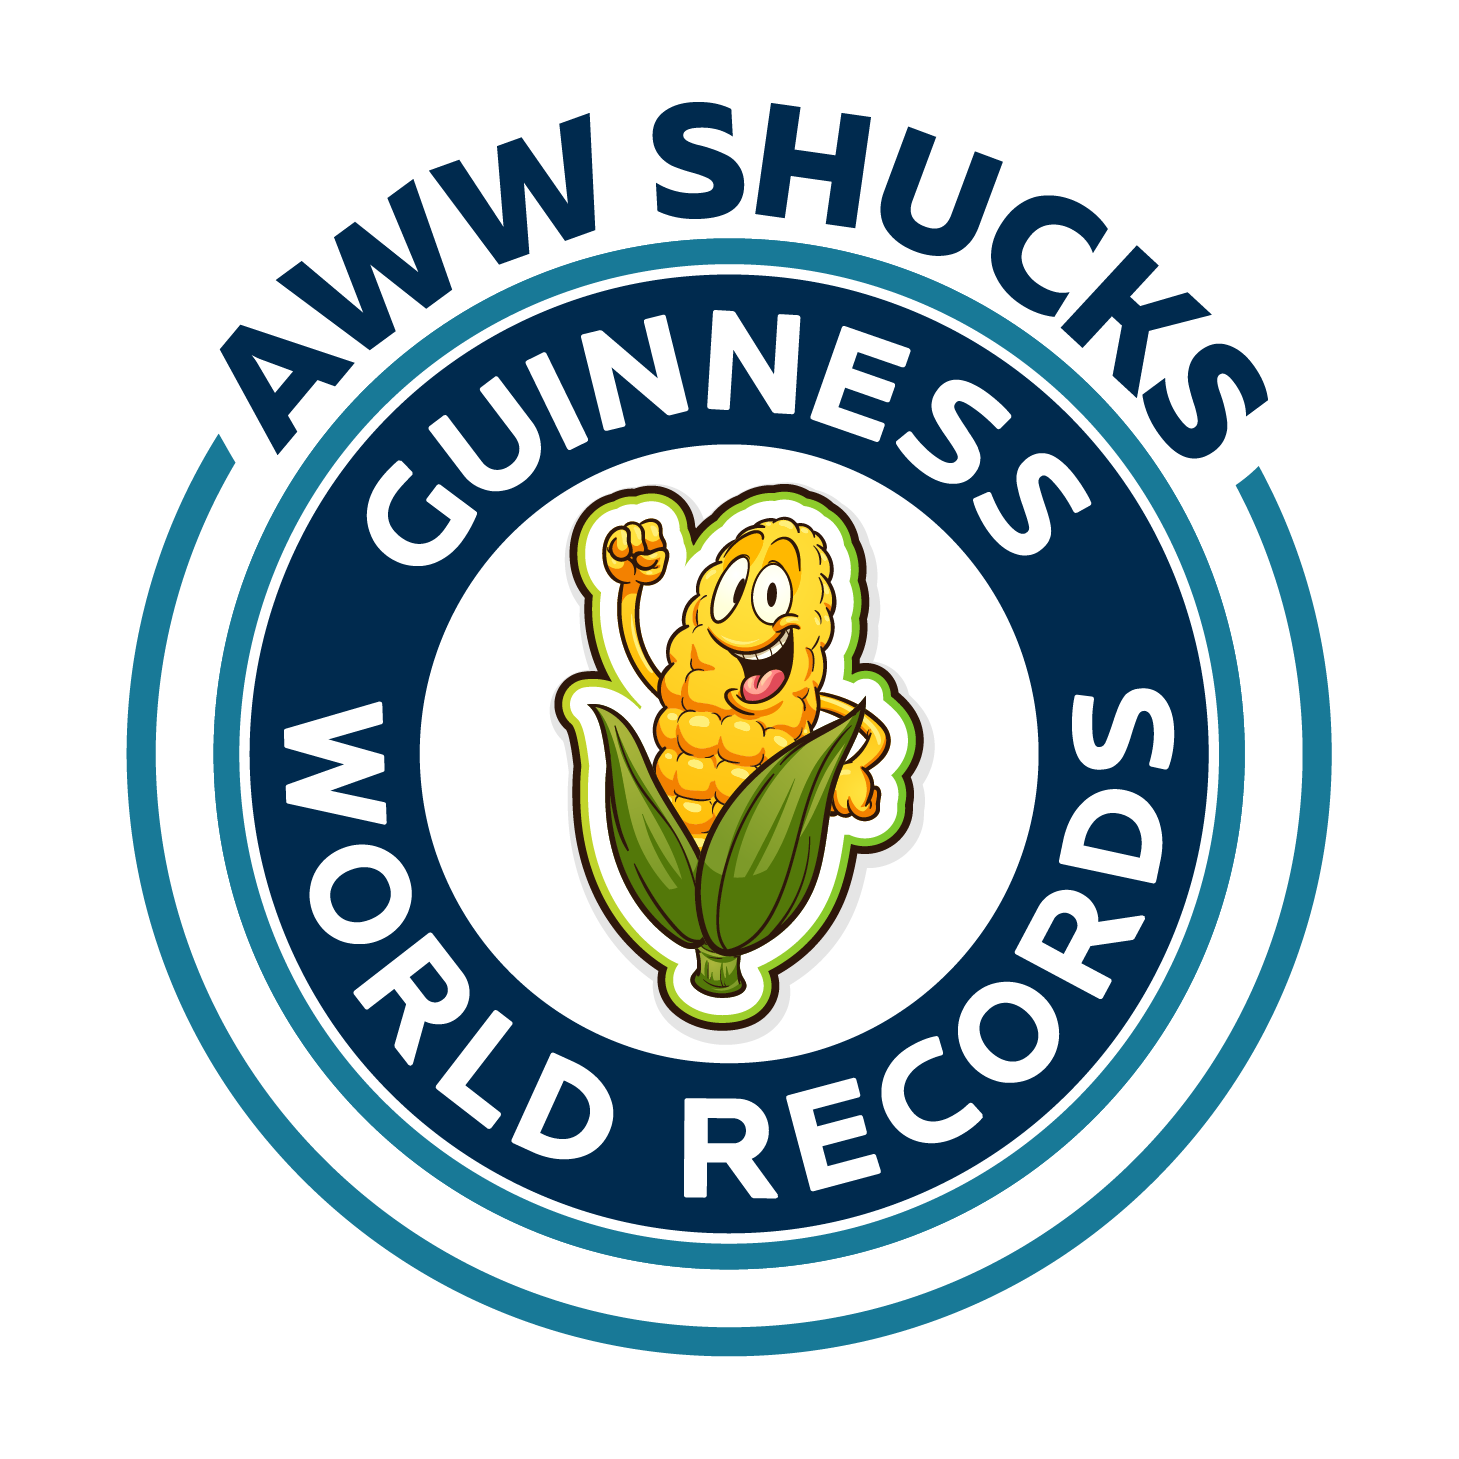 aww shucks guinness world records